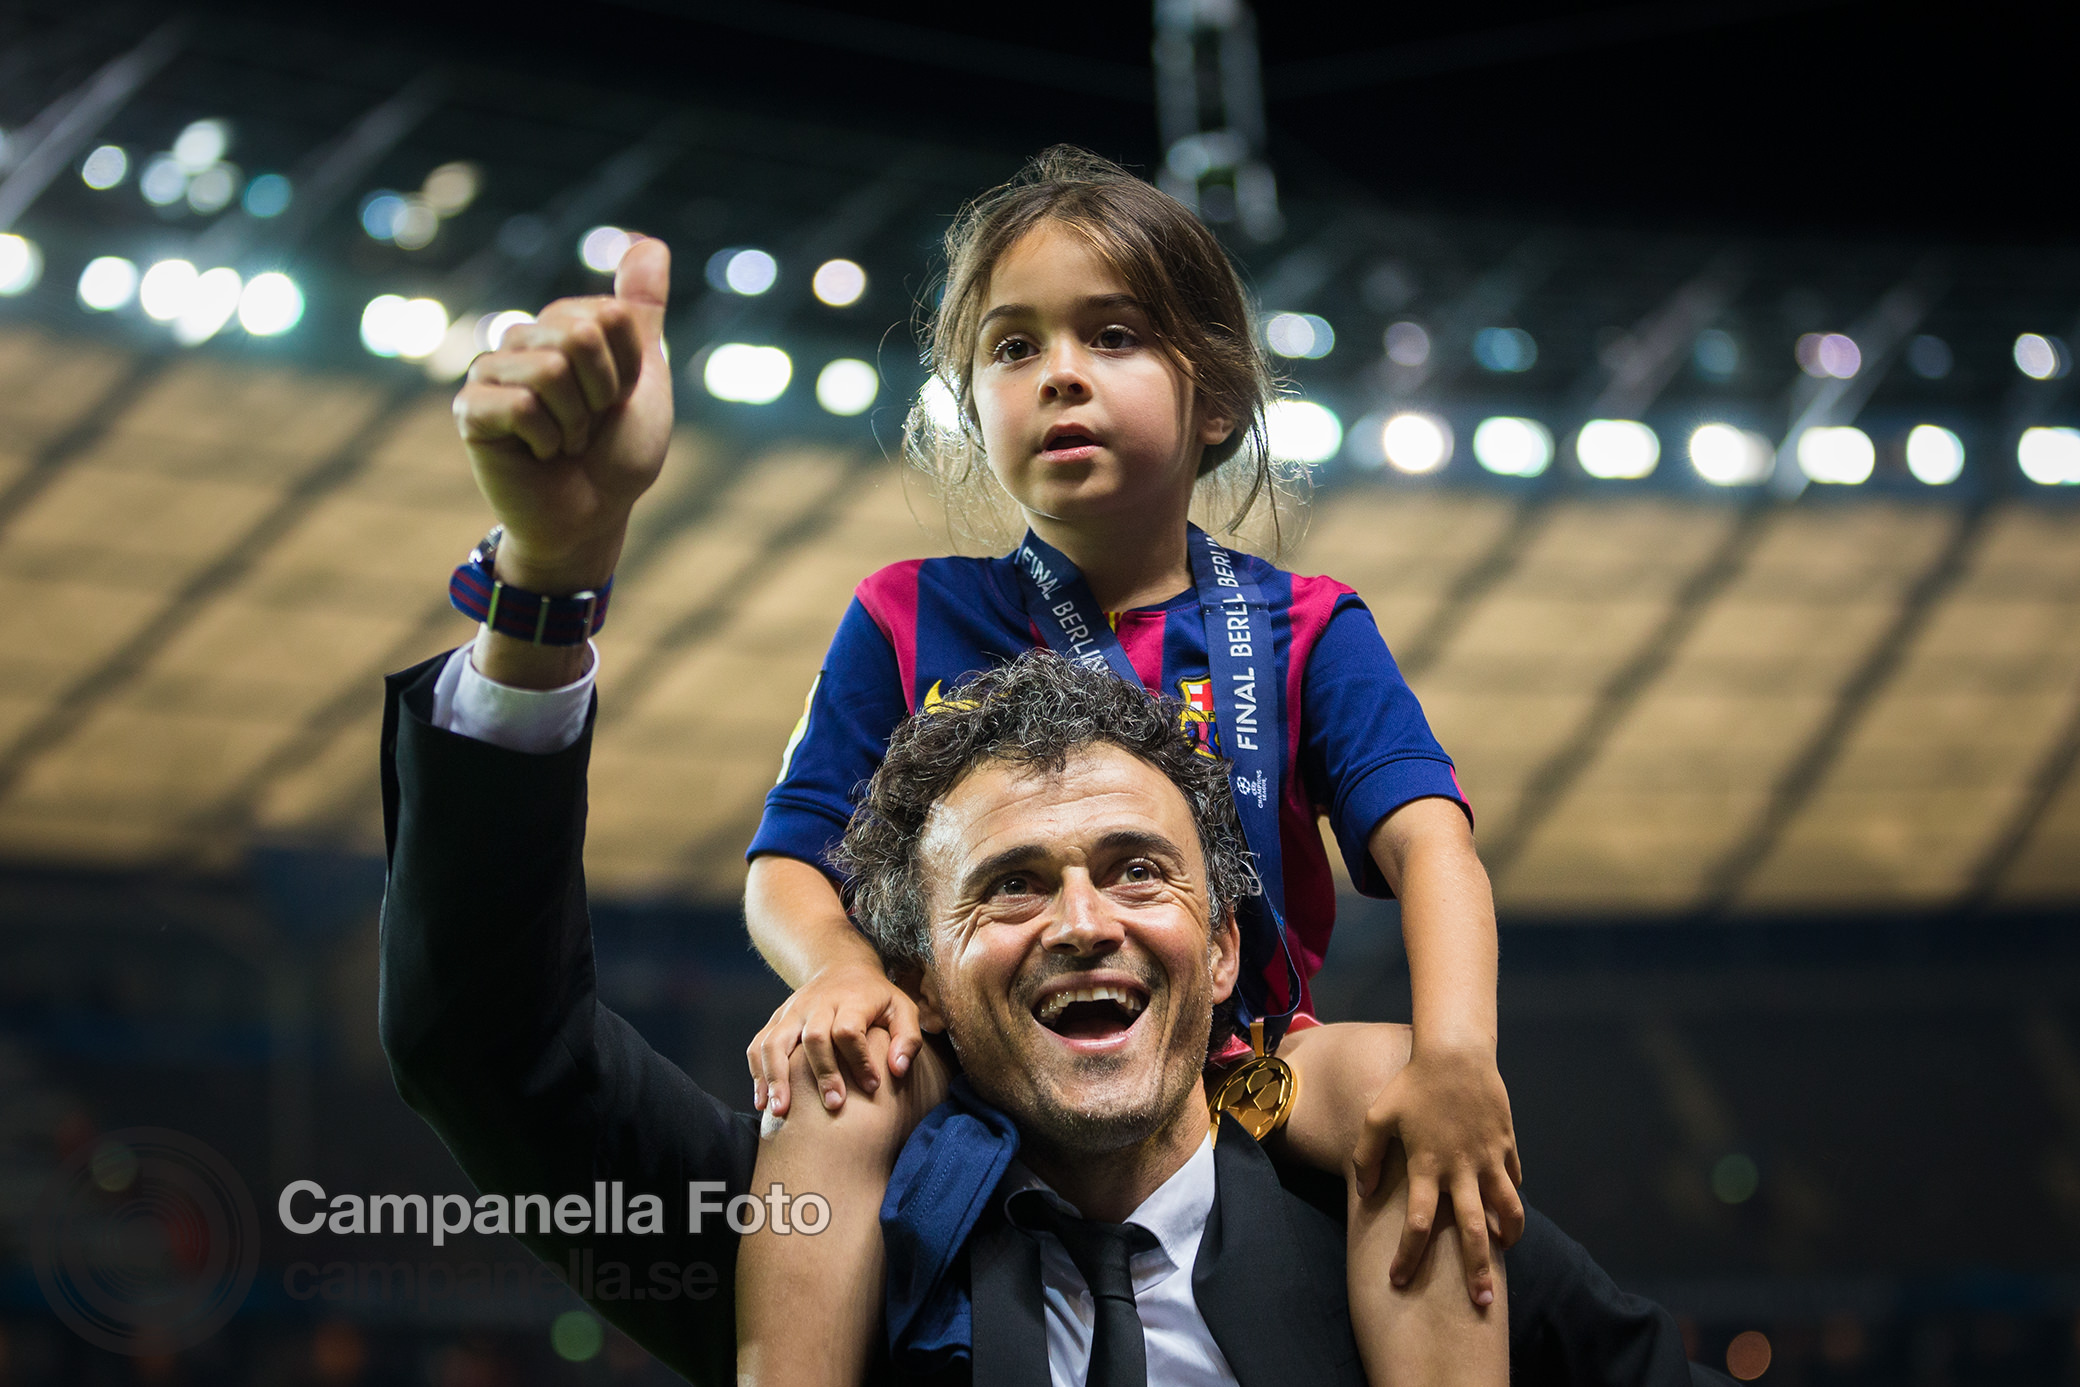 Champions League Final (Part. 2) - Michael Campanella Photography